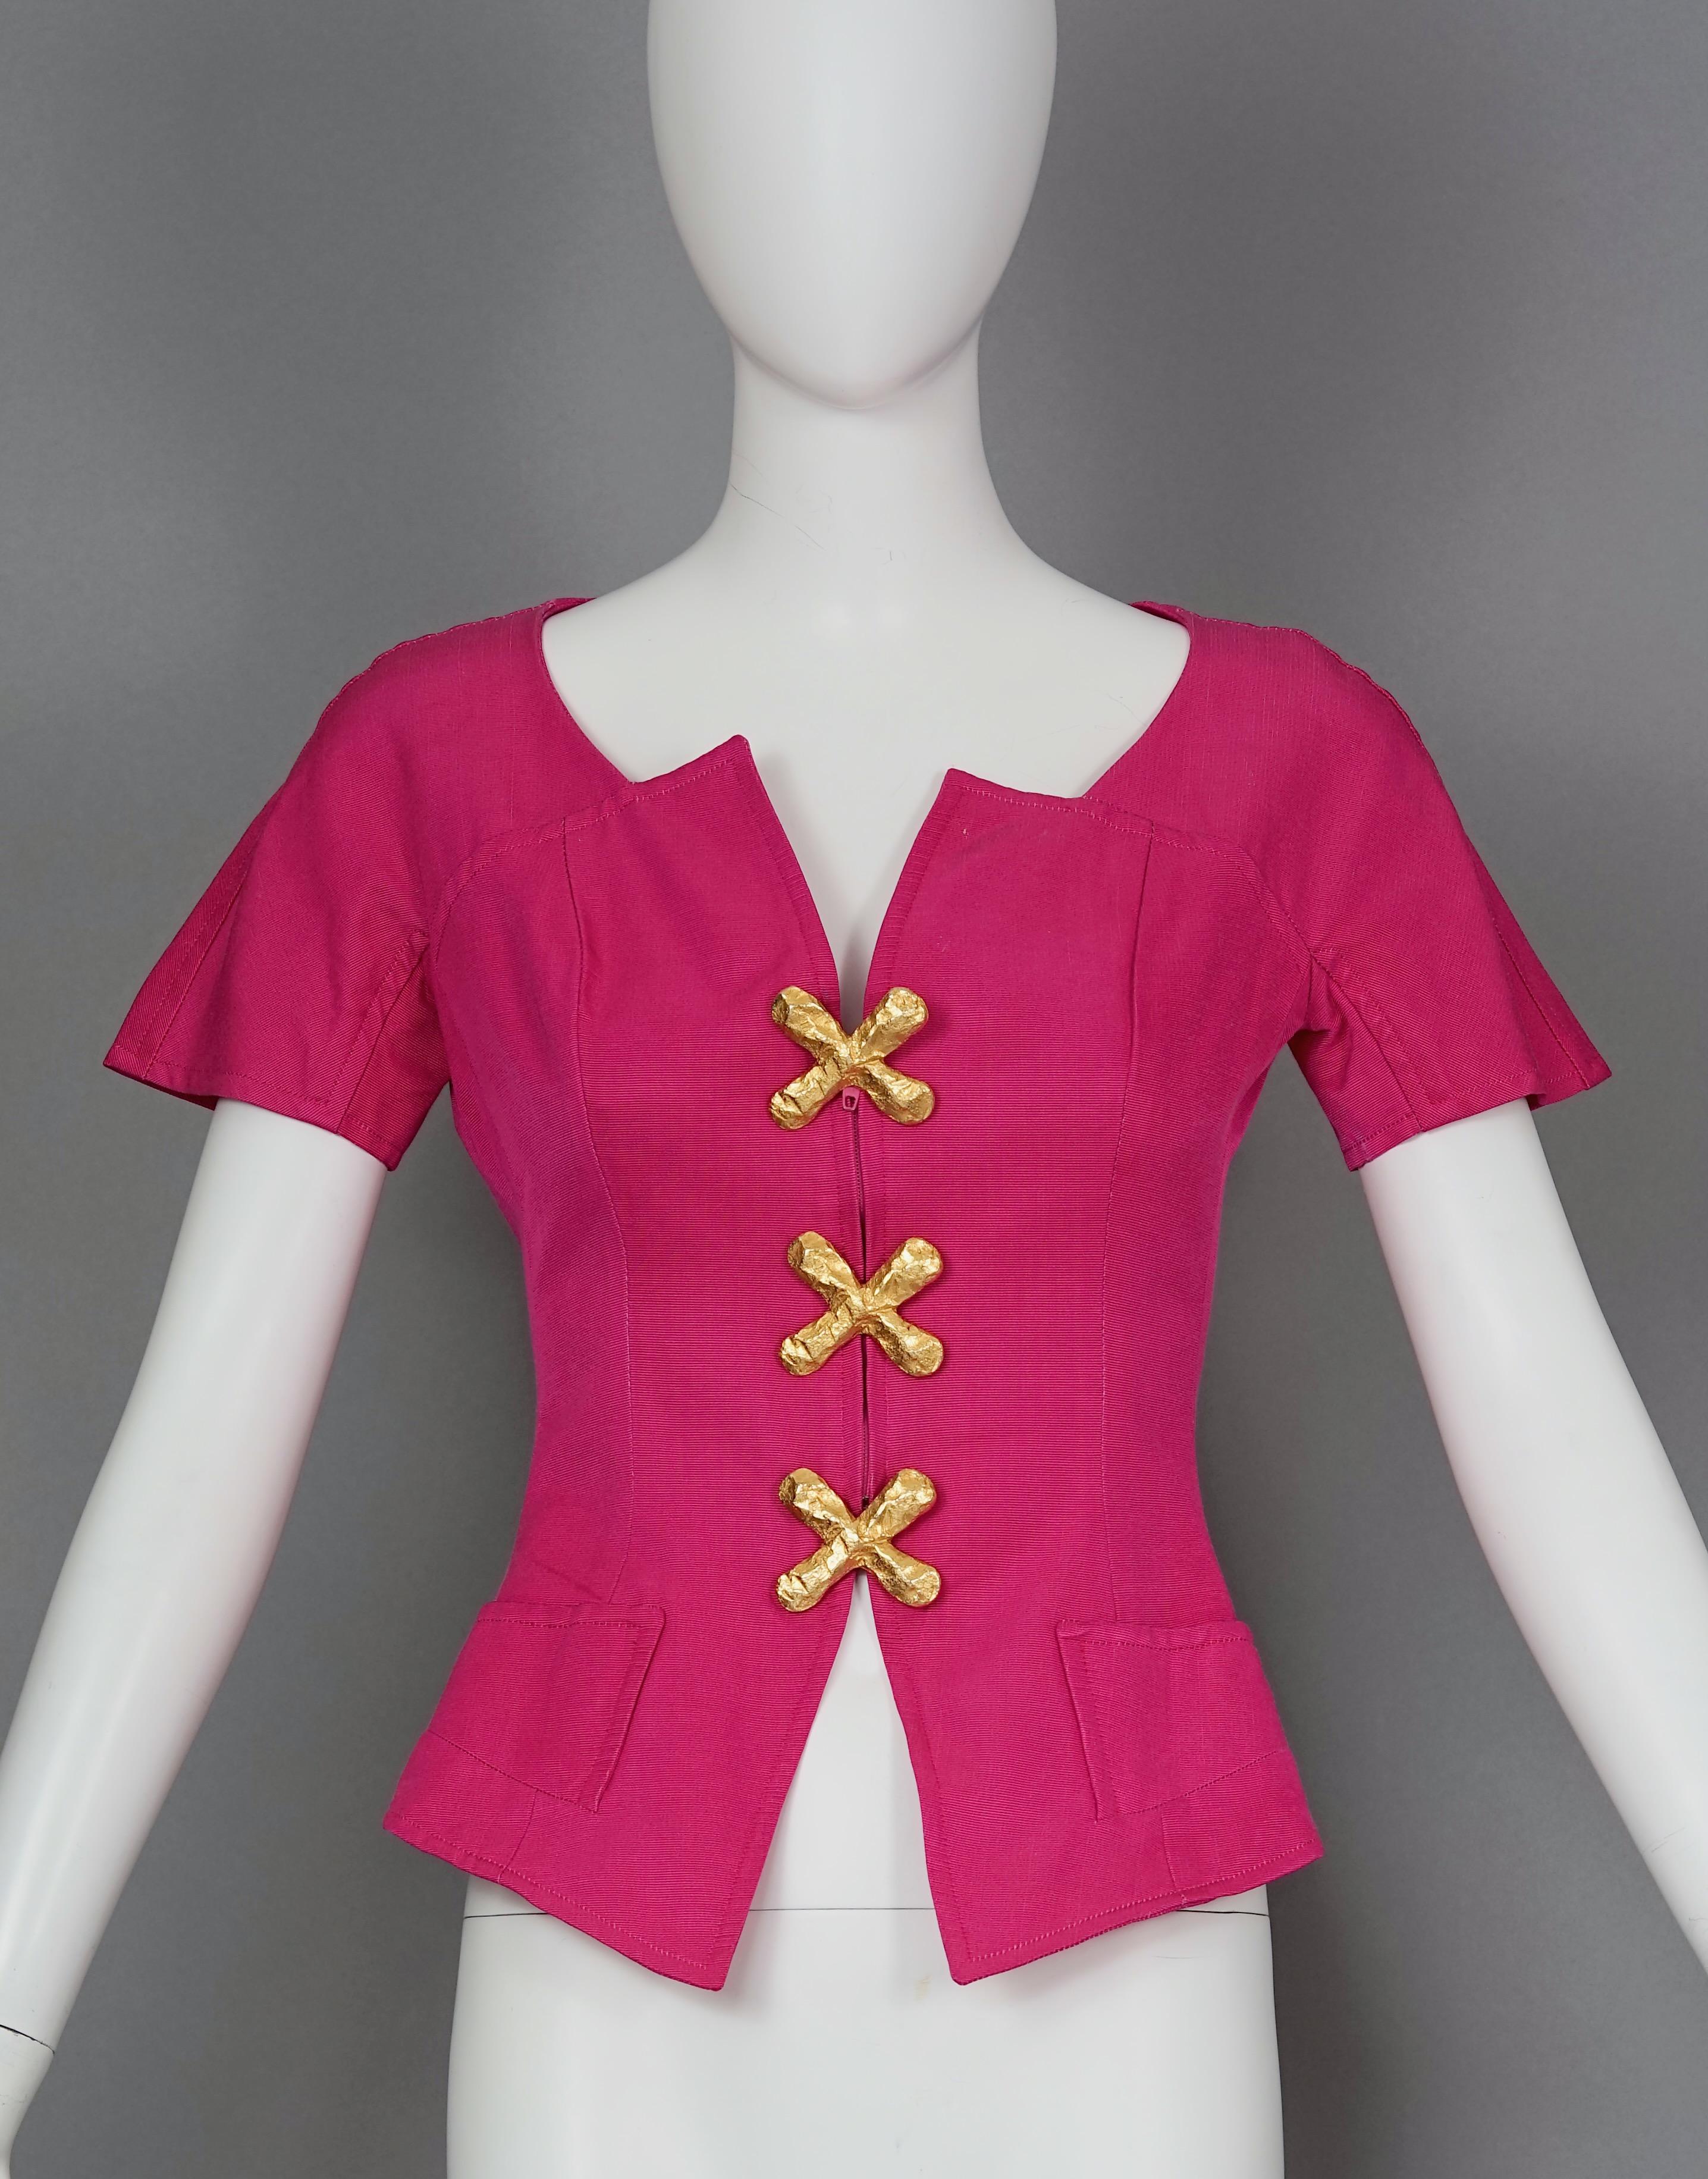 Women's Vintage CRISTIAN LACROIX Jewelled Fuchsia Pink Blouse Top For Sale